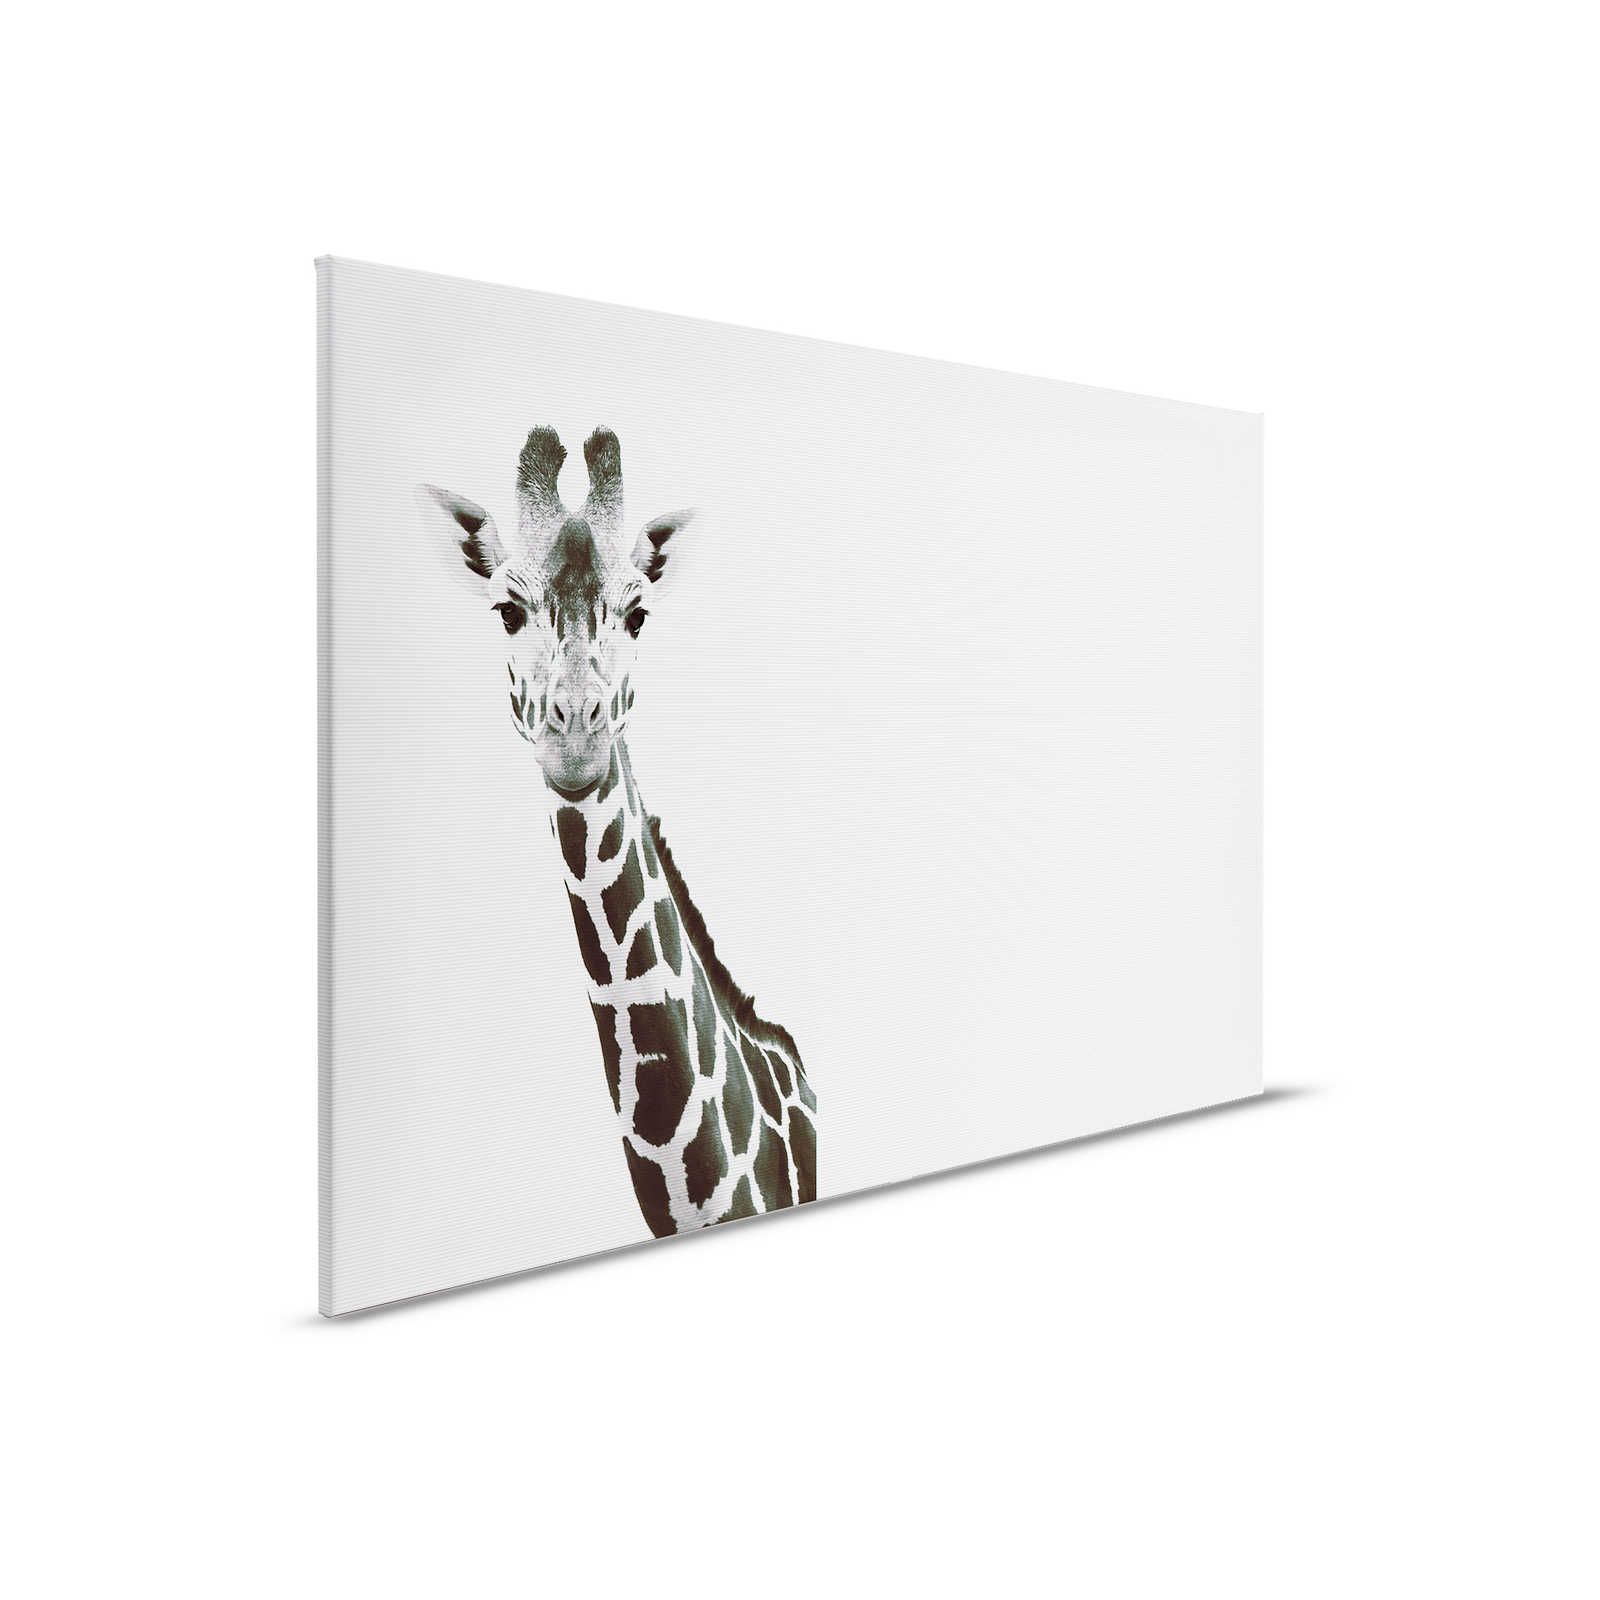 Giraffes Canvas Painting XXL Black & White Design - 0.90 m x 0.60 m
